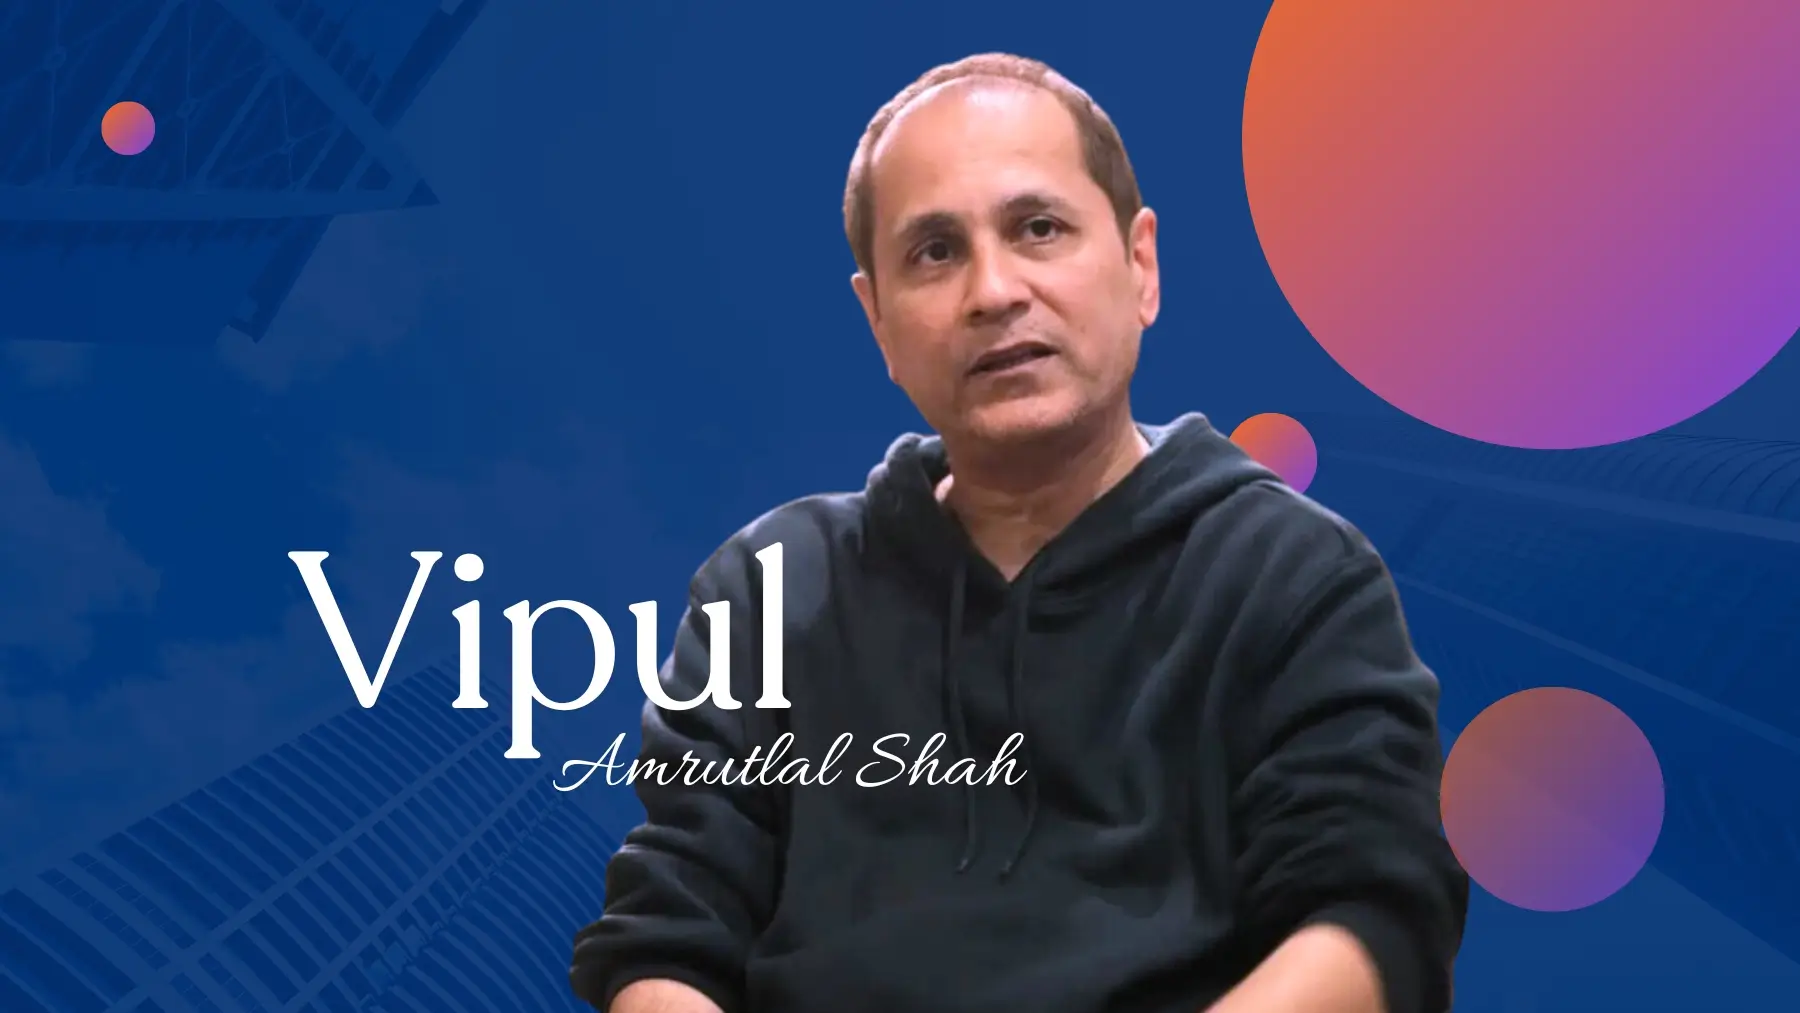 Vipul Amrutlal Shah Net Worth, Biography, Age, and Family